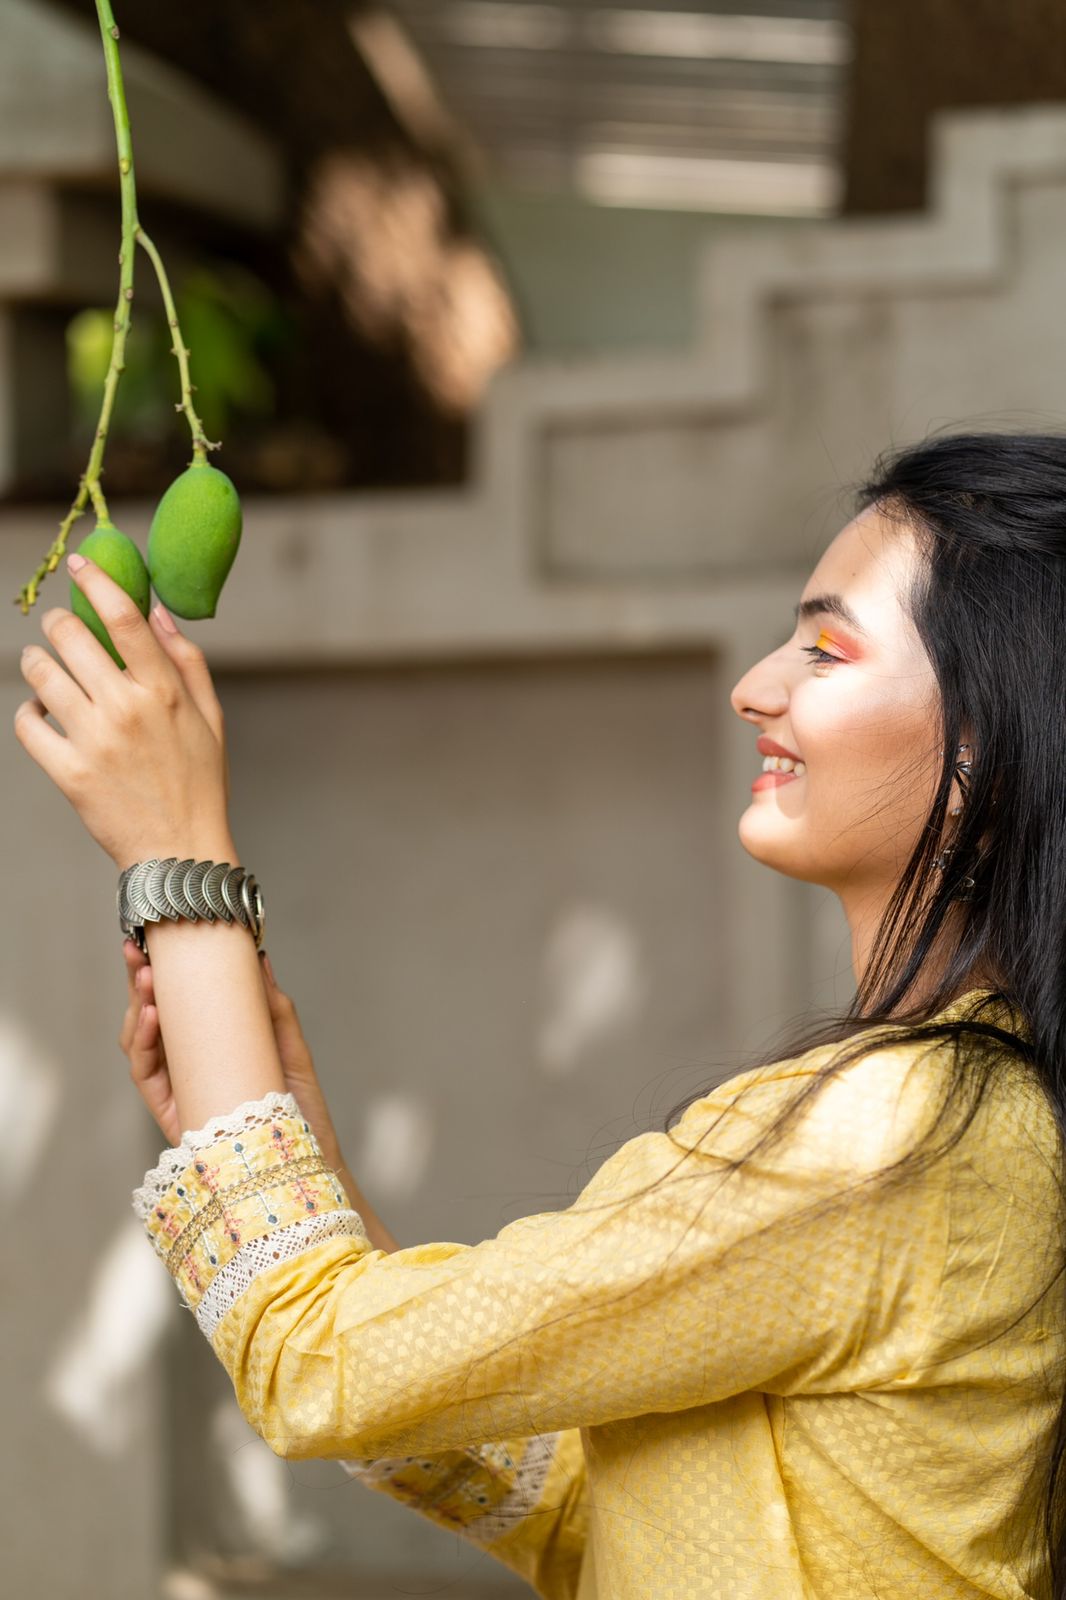 Raashii Khanna Adds A Desi Glam In Beautiful Anarkali: See Photos